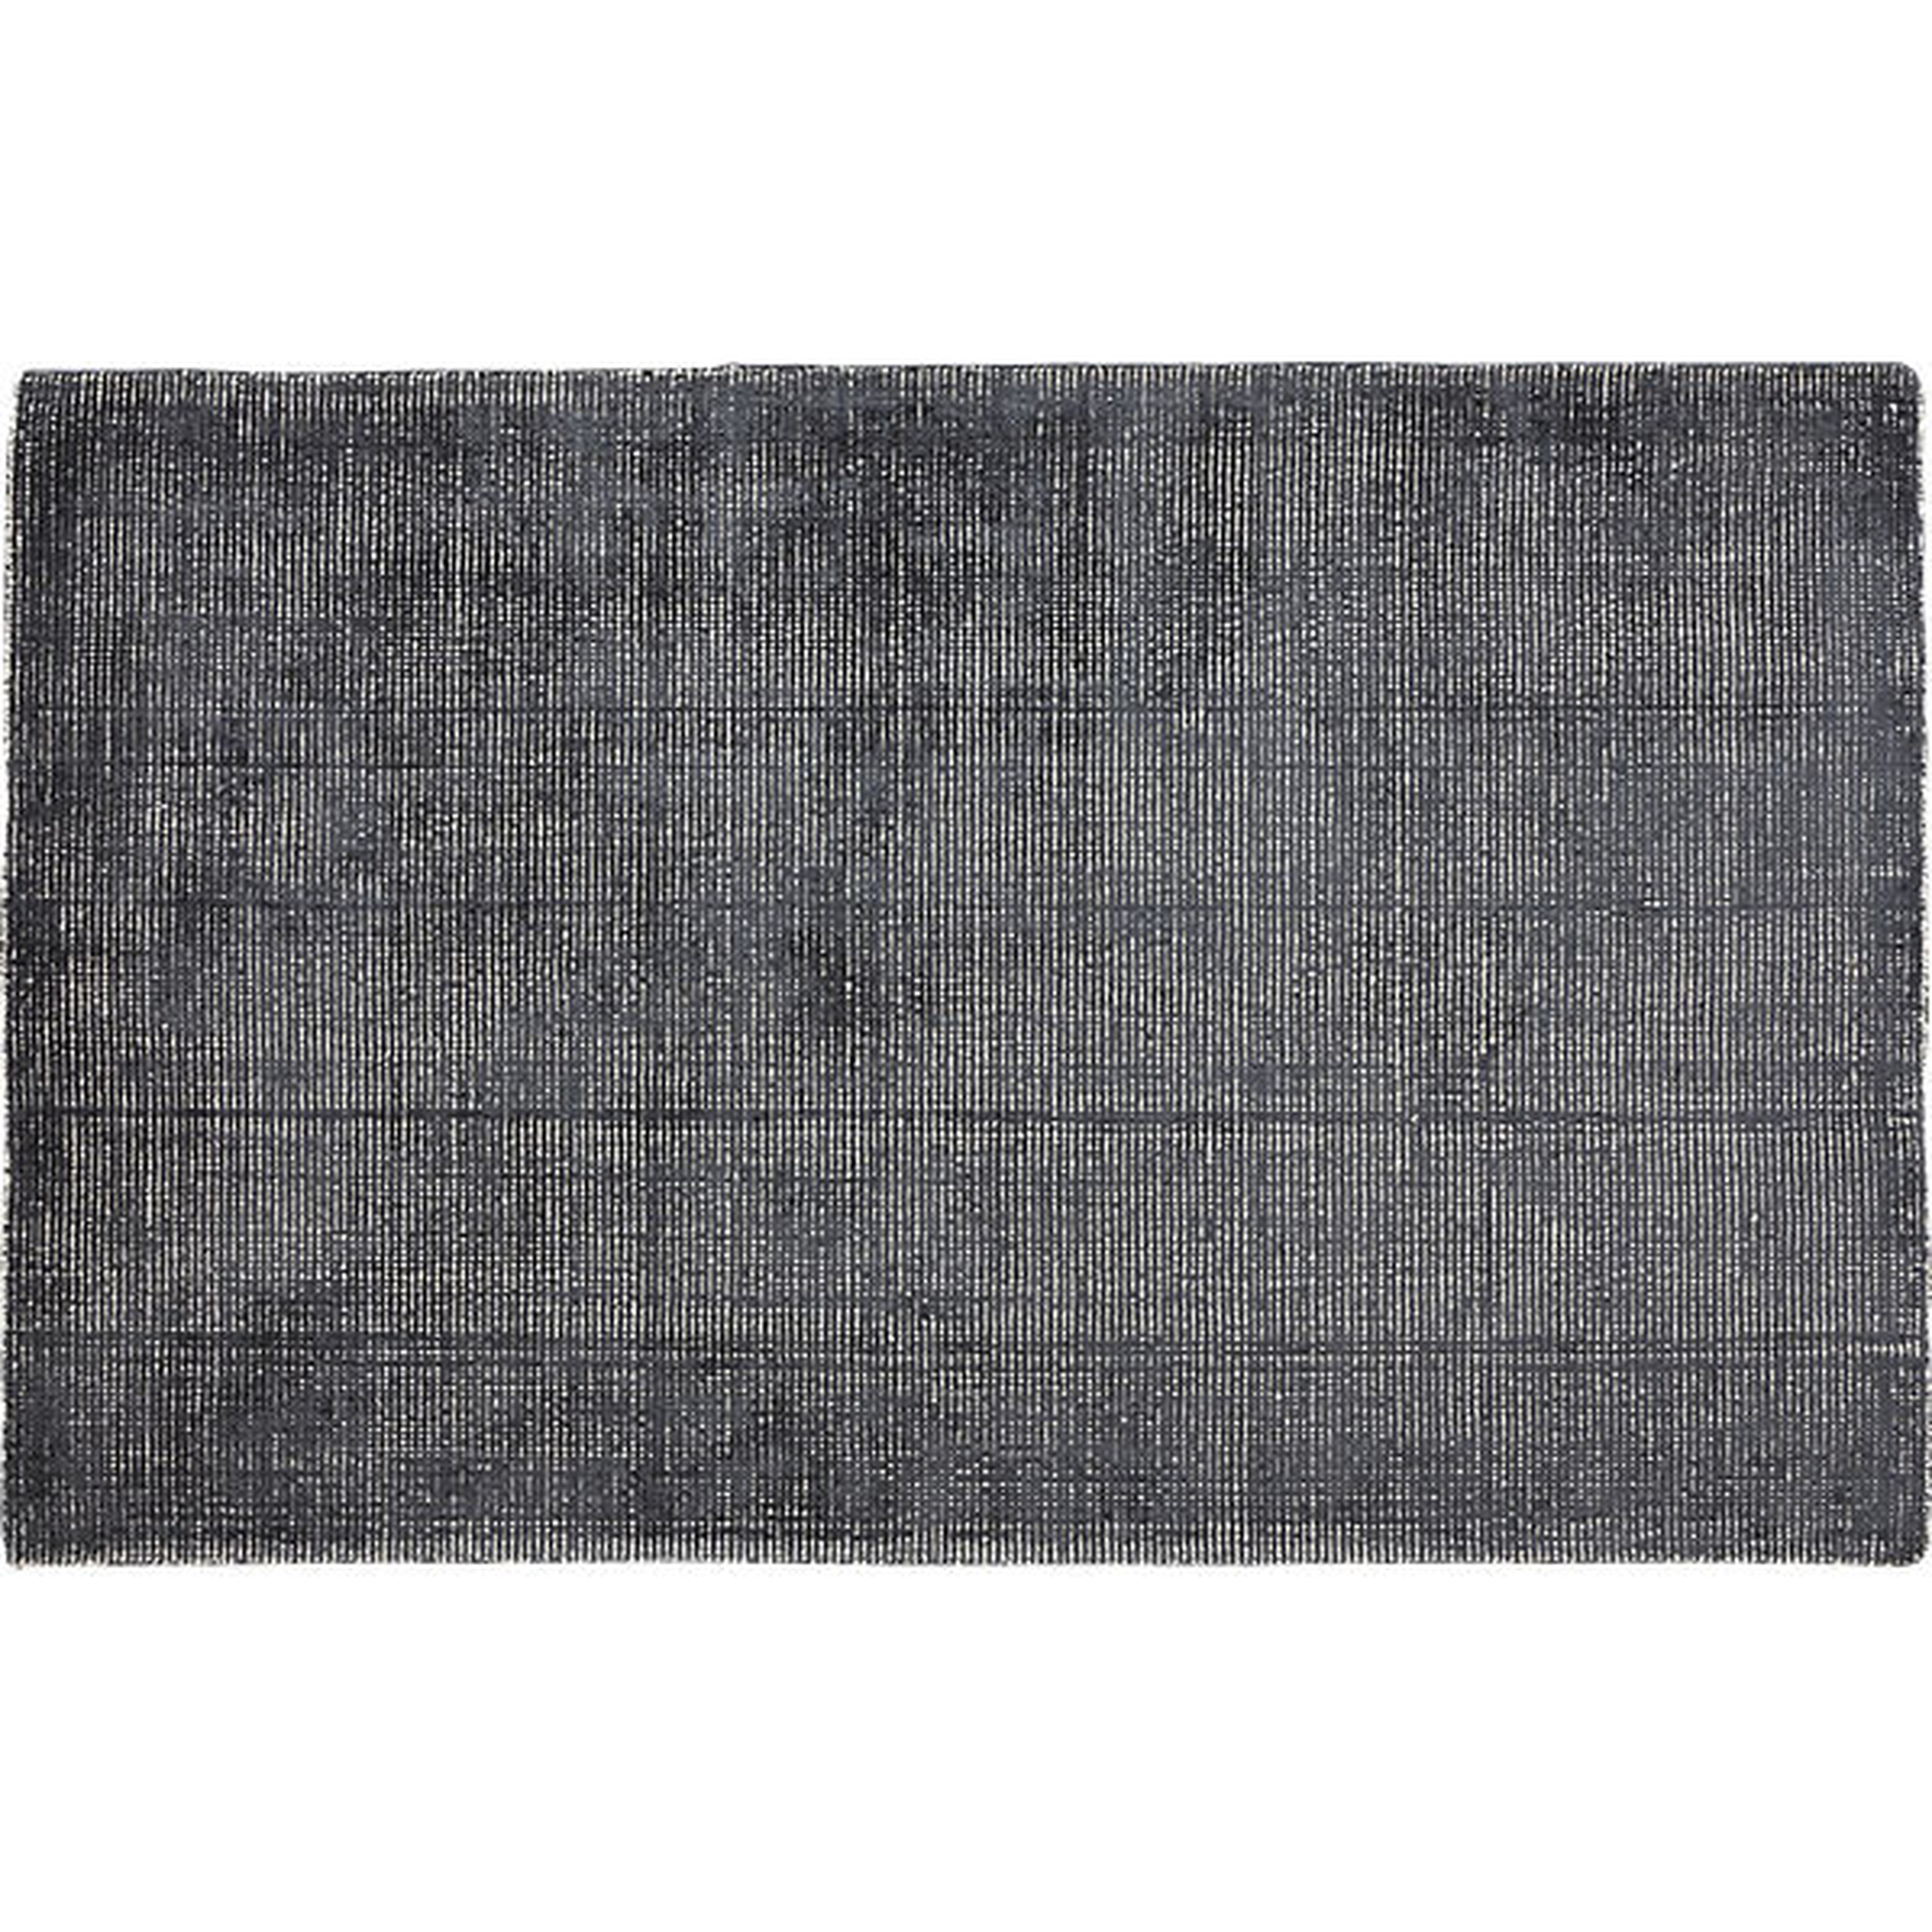 Scatter grey rug 8'x10' - CB2